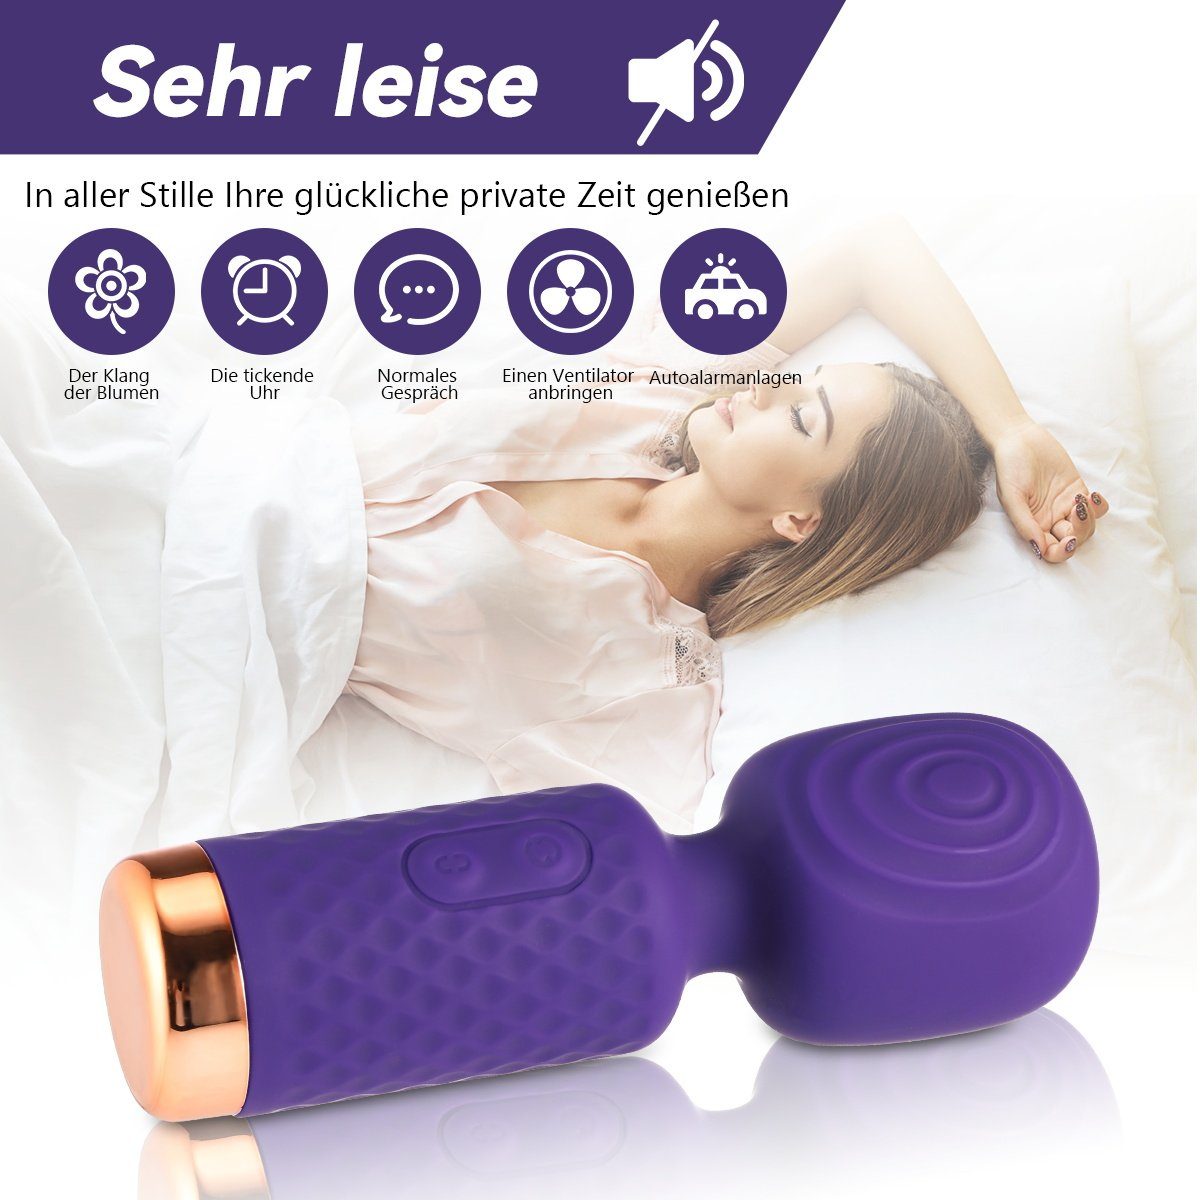 Weibliche Vibrationsmodi Mini Mini-Vibrator Vibrator, Stimulator, Klitoris 10 mit Leises Handmassagegerät LETGOSPT